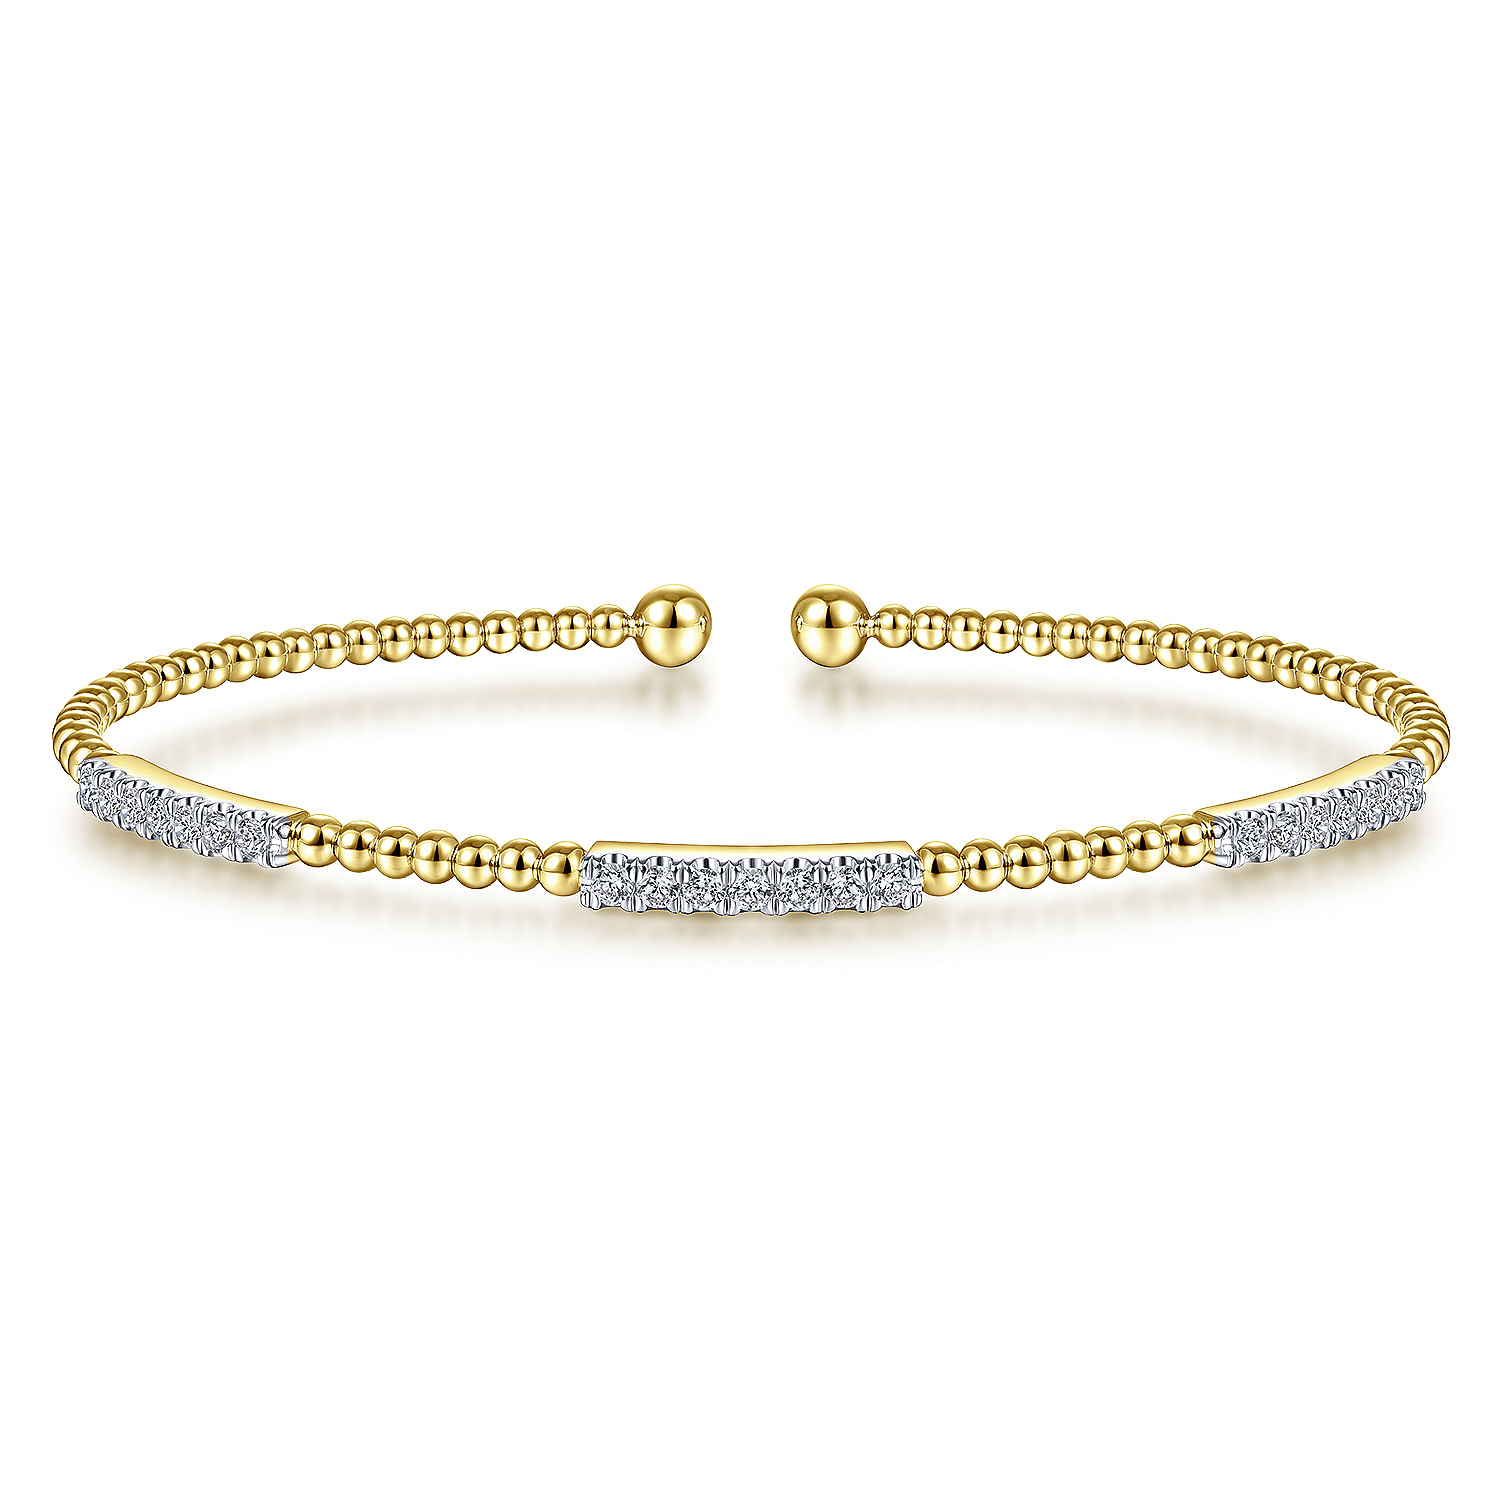 14K Yellow Gold Bujukan Bead Cuff Bracelet with Diamond Pave Stations